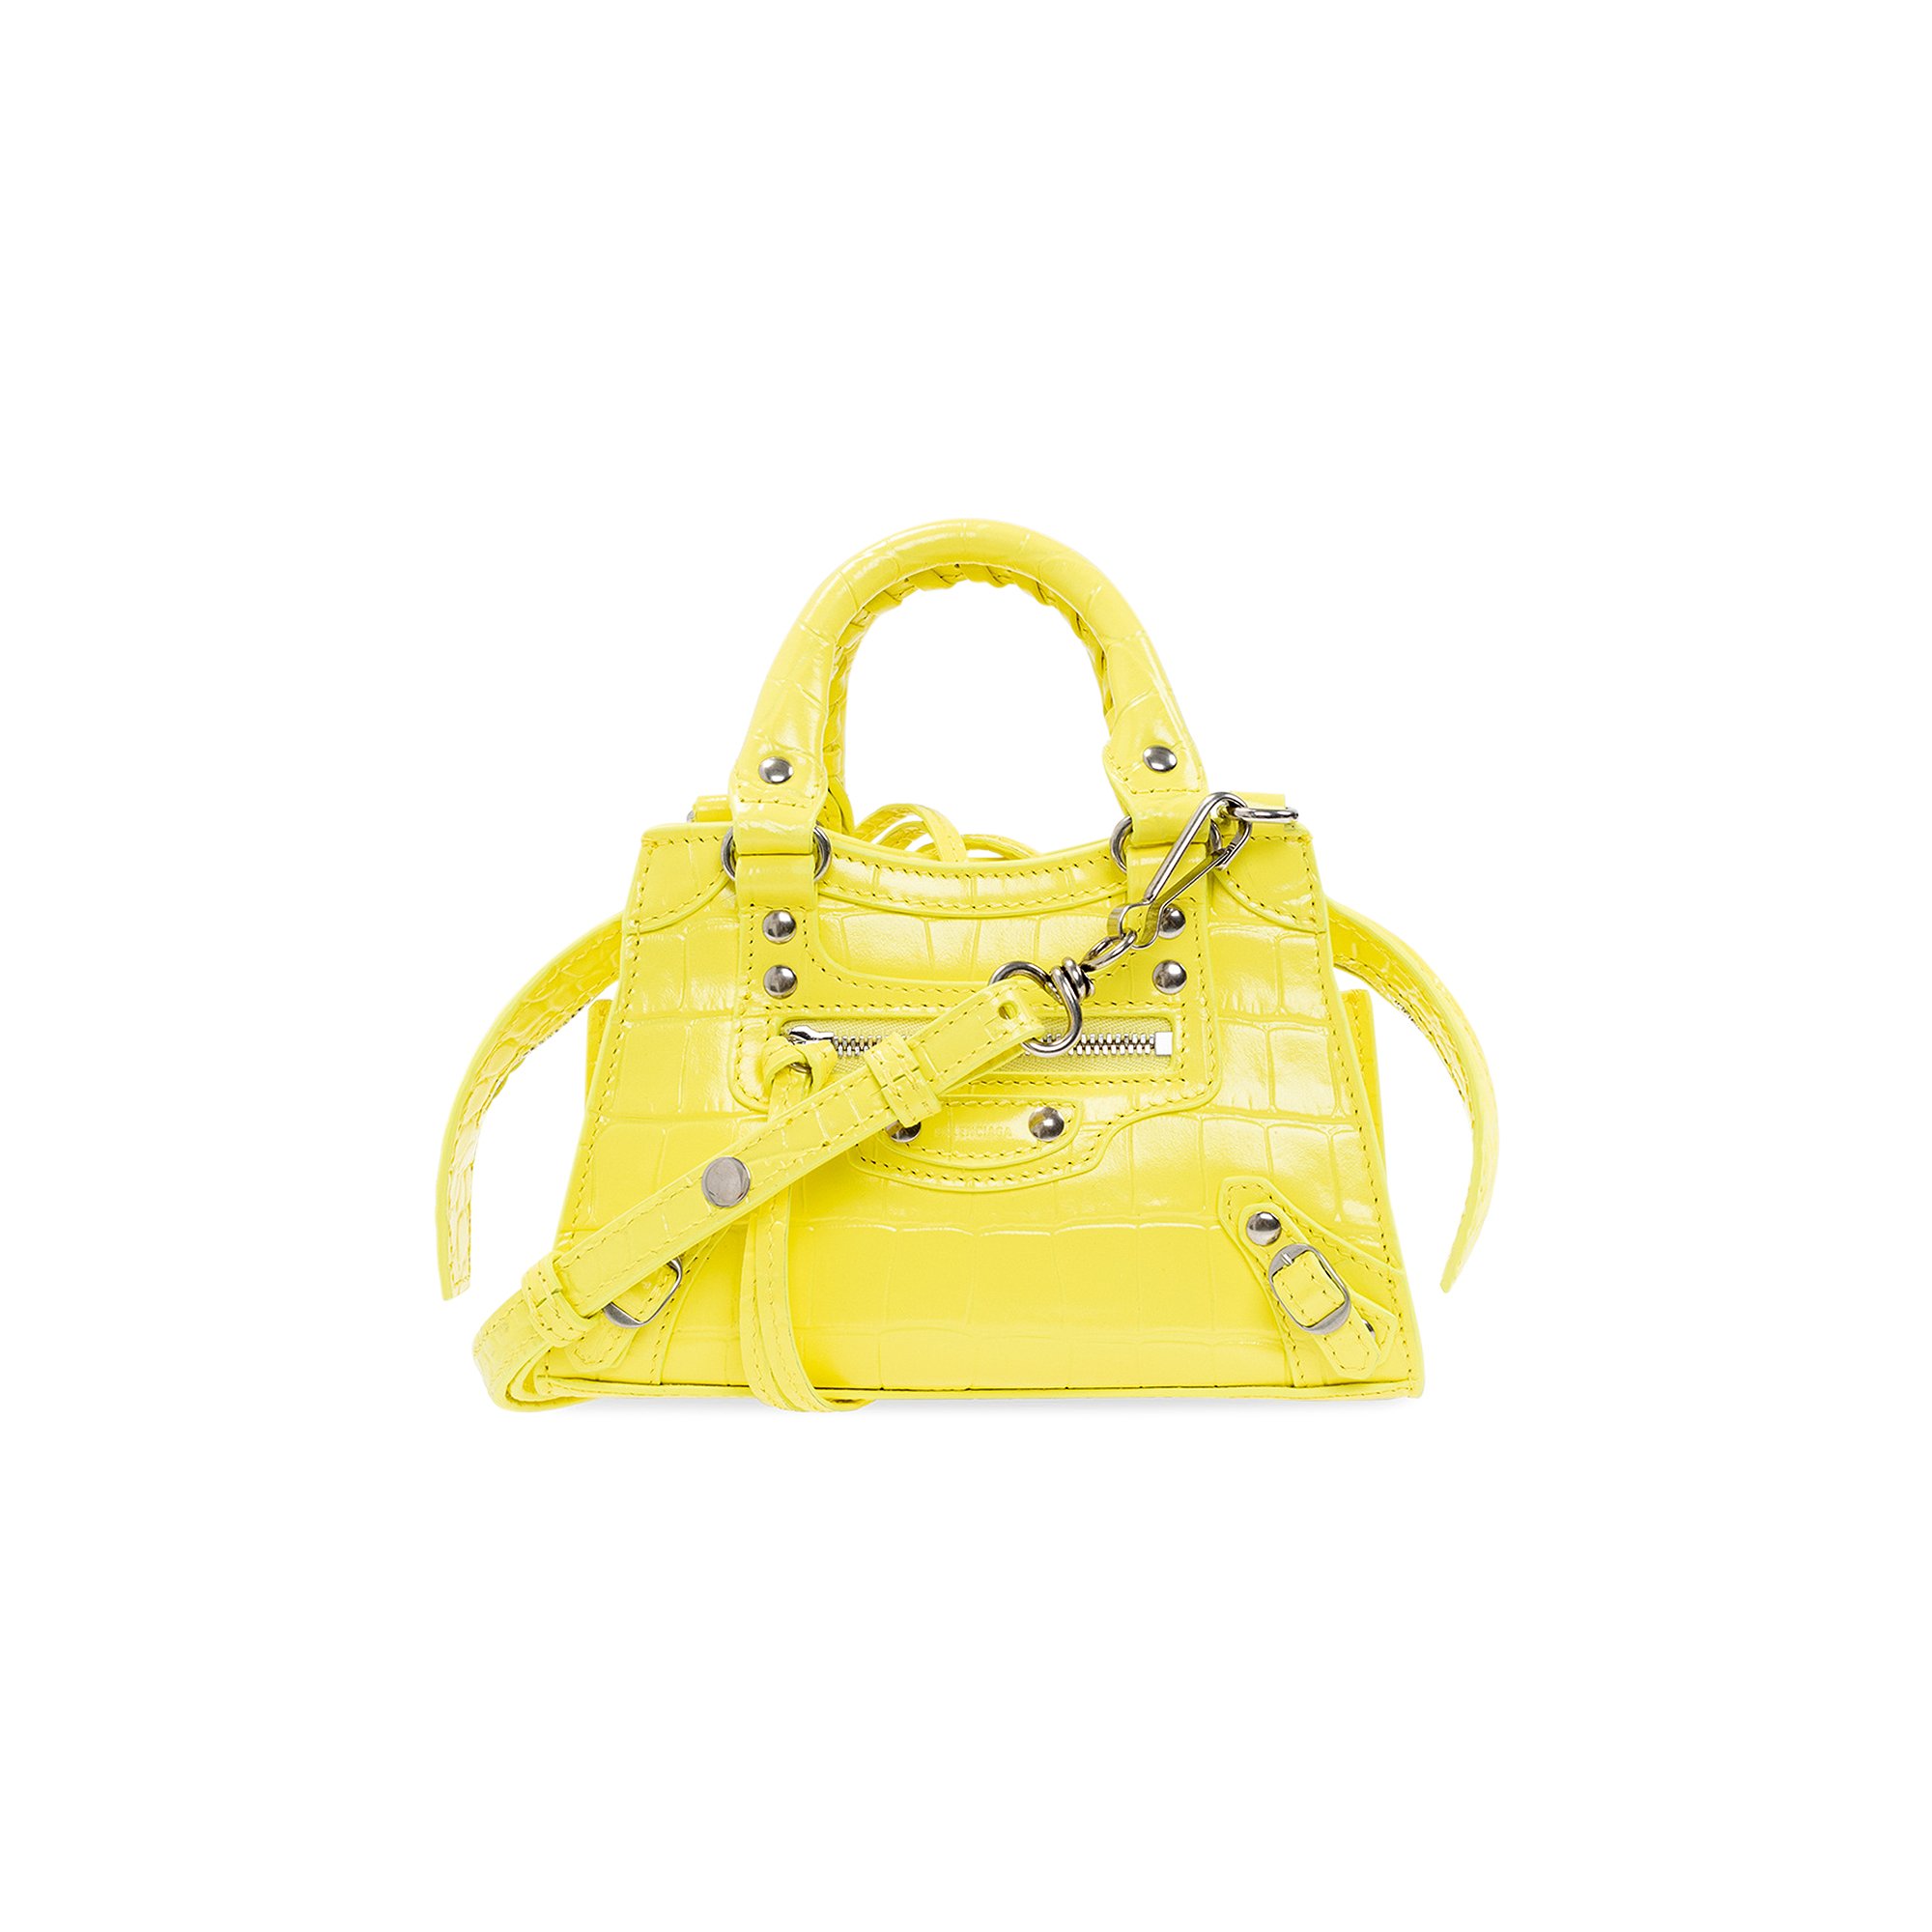 Authentic New Rare Balenciaga Yellow Small City Bag MSRP 2100  eBay